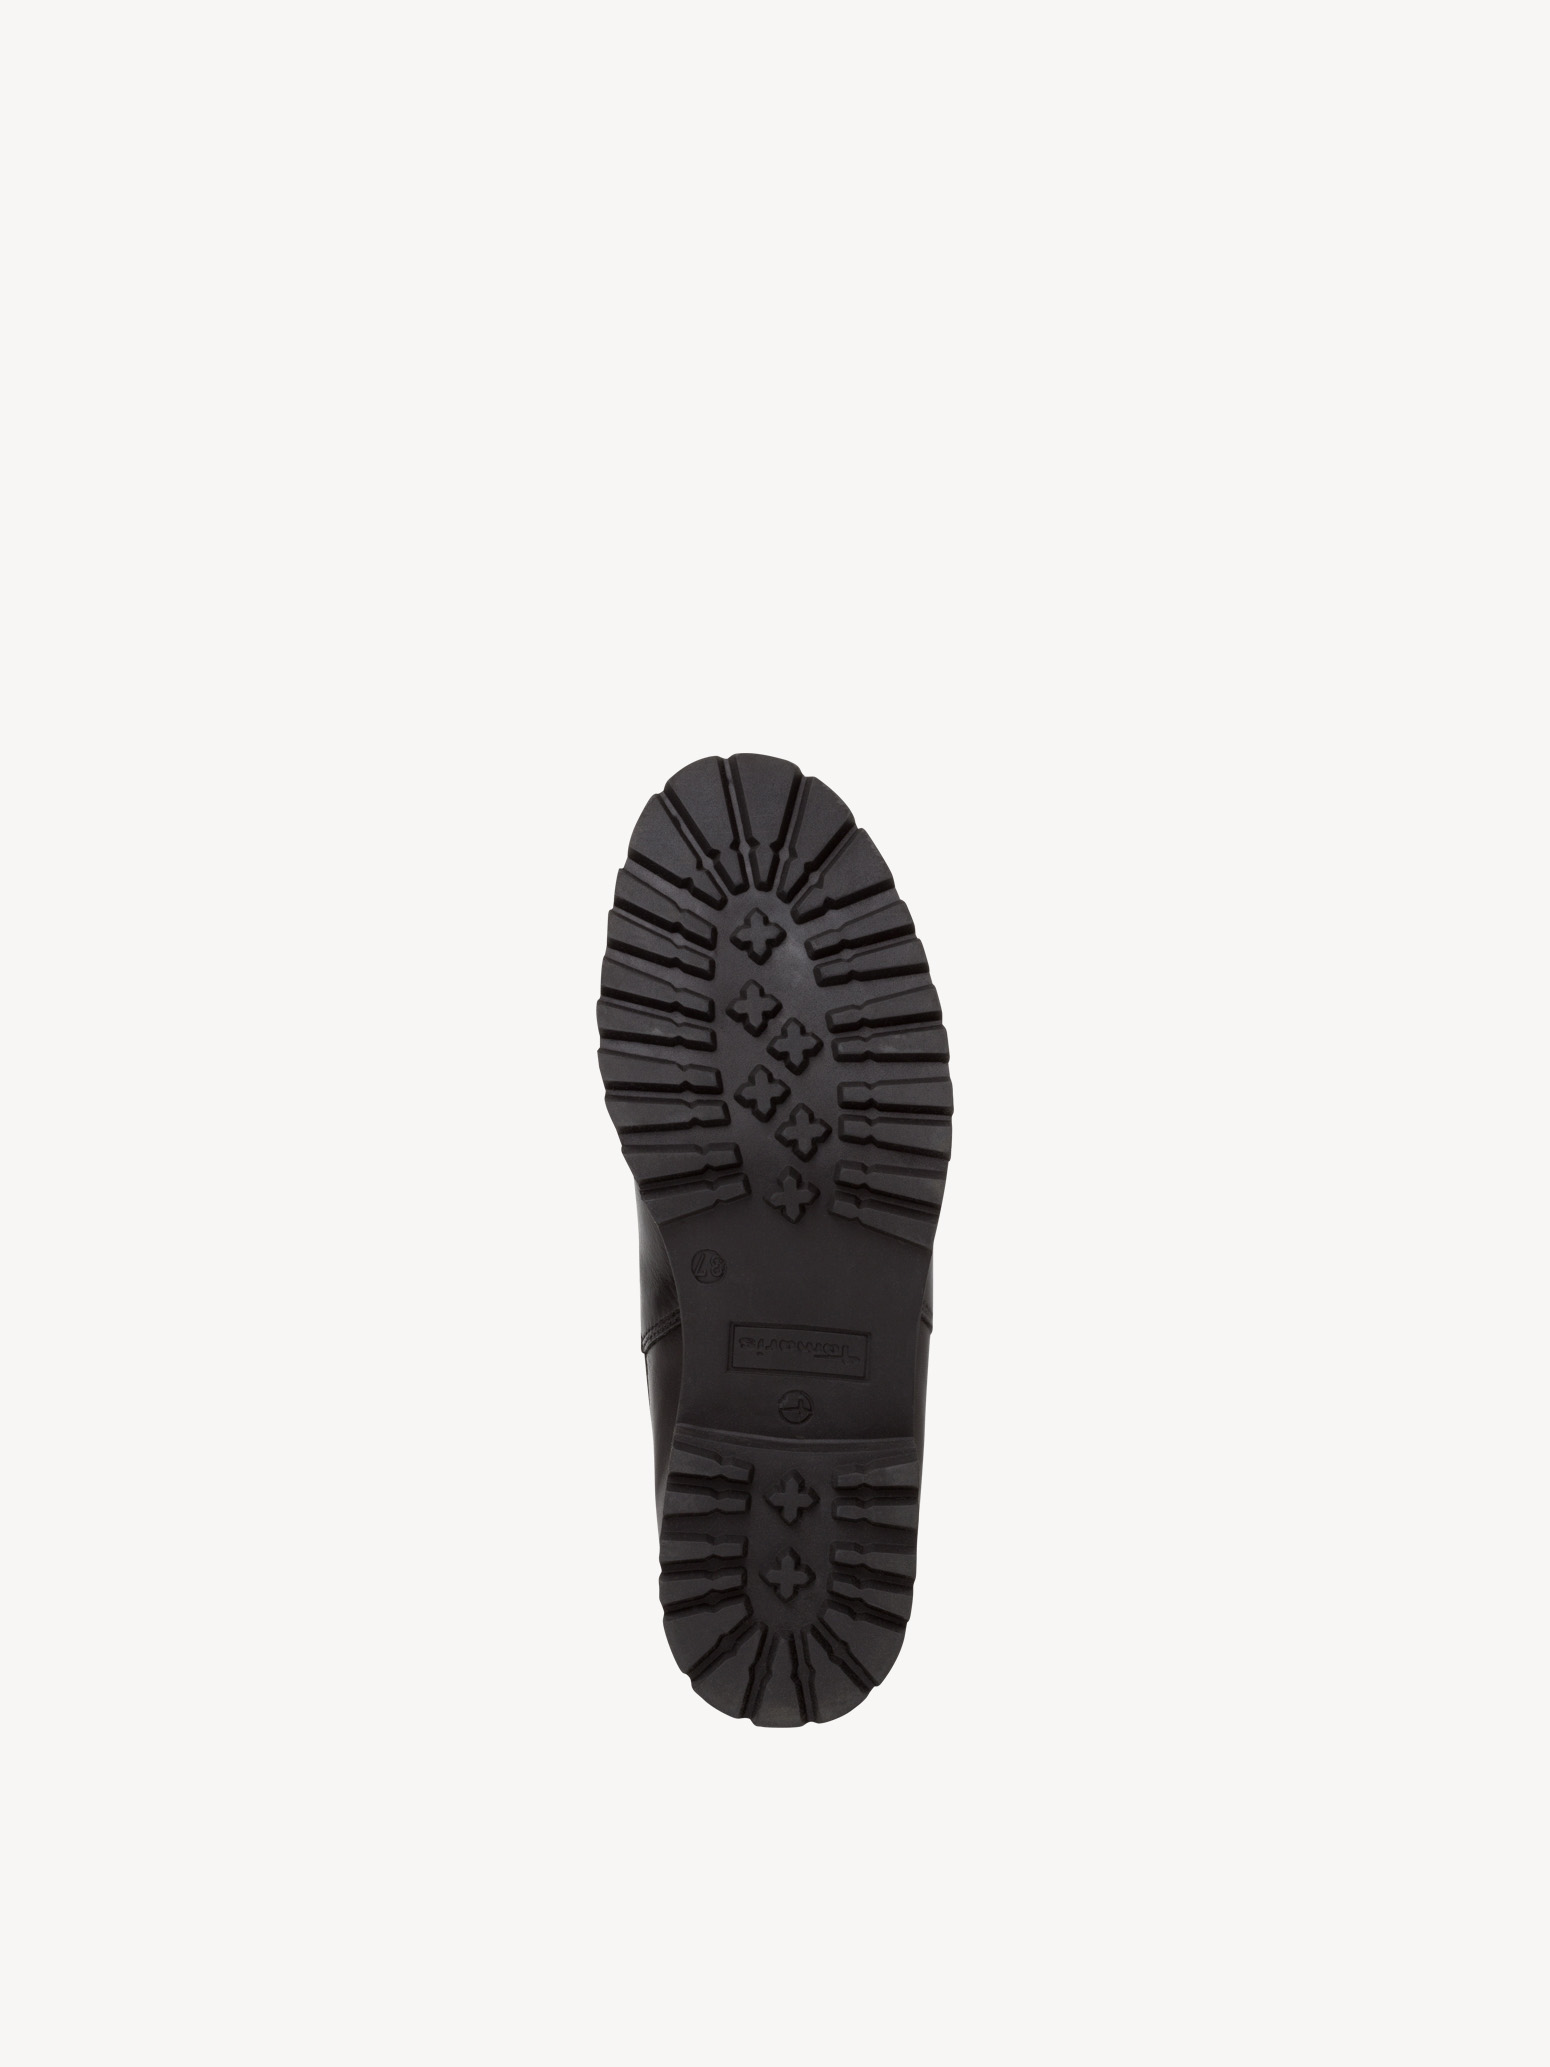 Leather Chelsea boot - black, BLACK/FUR, hi-res